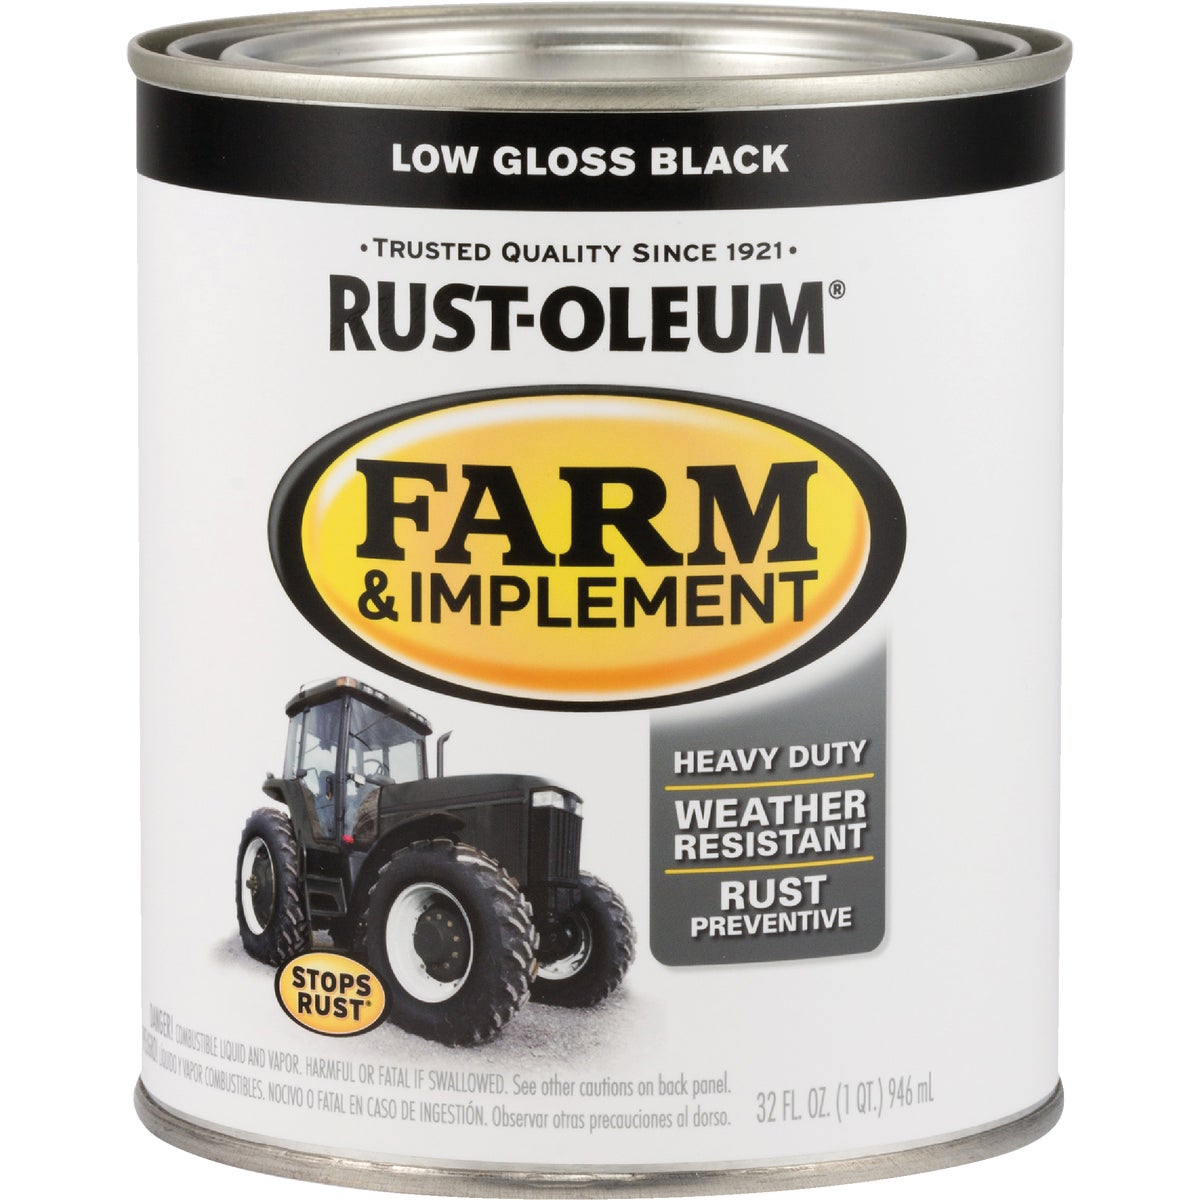 Rust-Oleum 1 Quart Black Low Gloss Farm & Implement Enamel